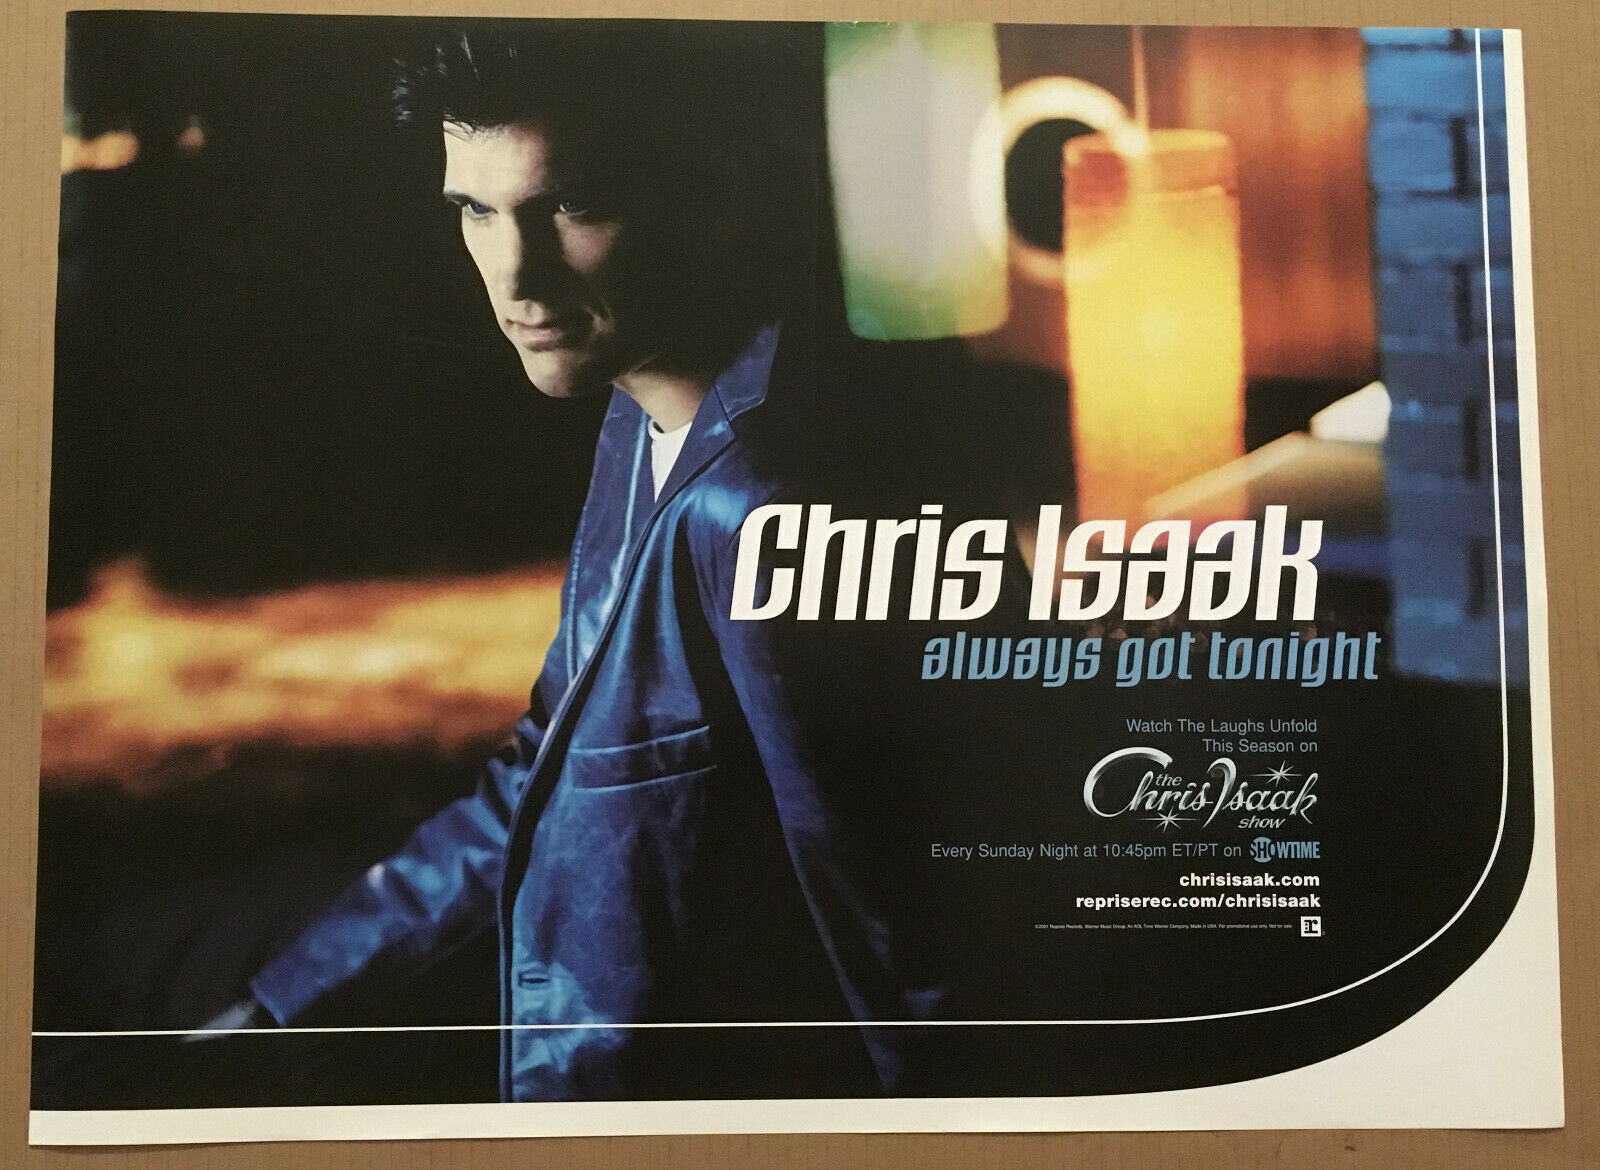 Chris Isaak Rare 2001 Promo Poster 4 Always Cd Mint Usa 24x18 Never Displayed